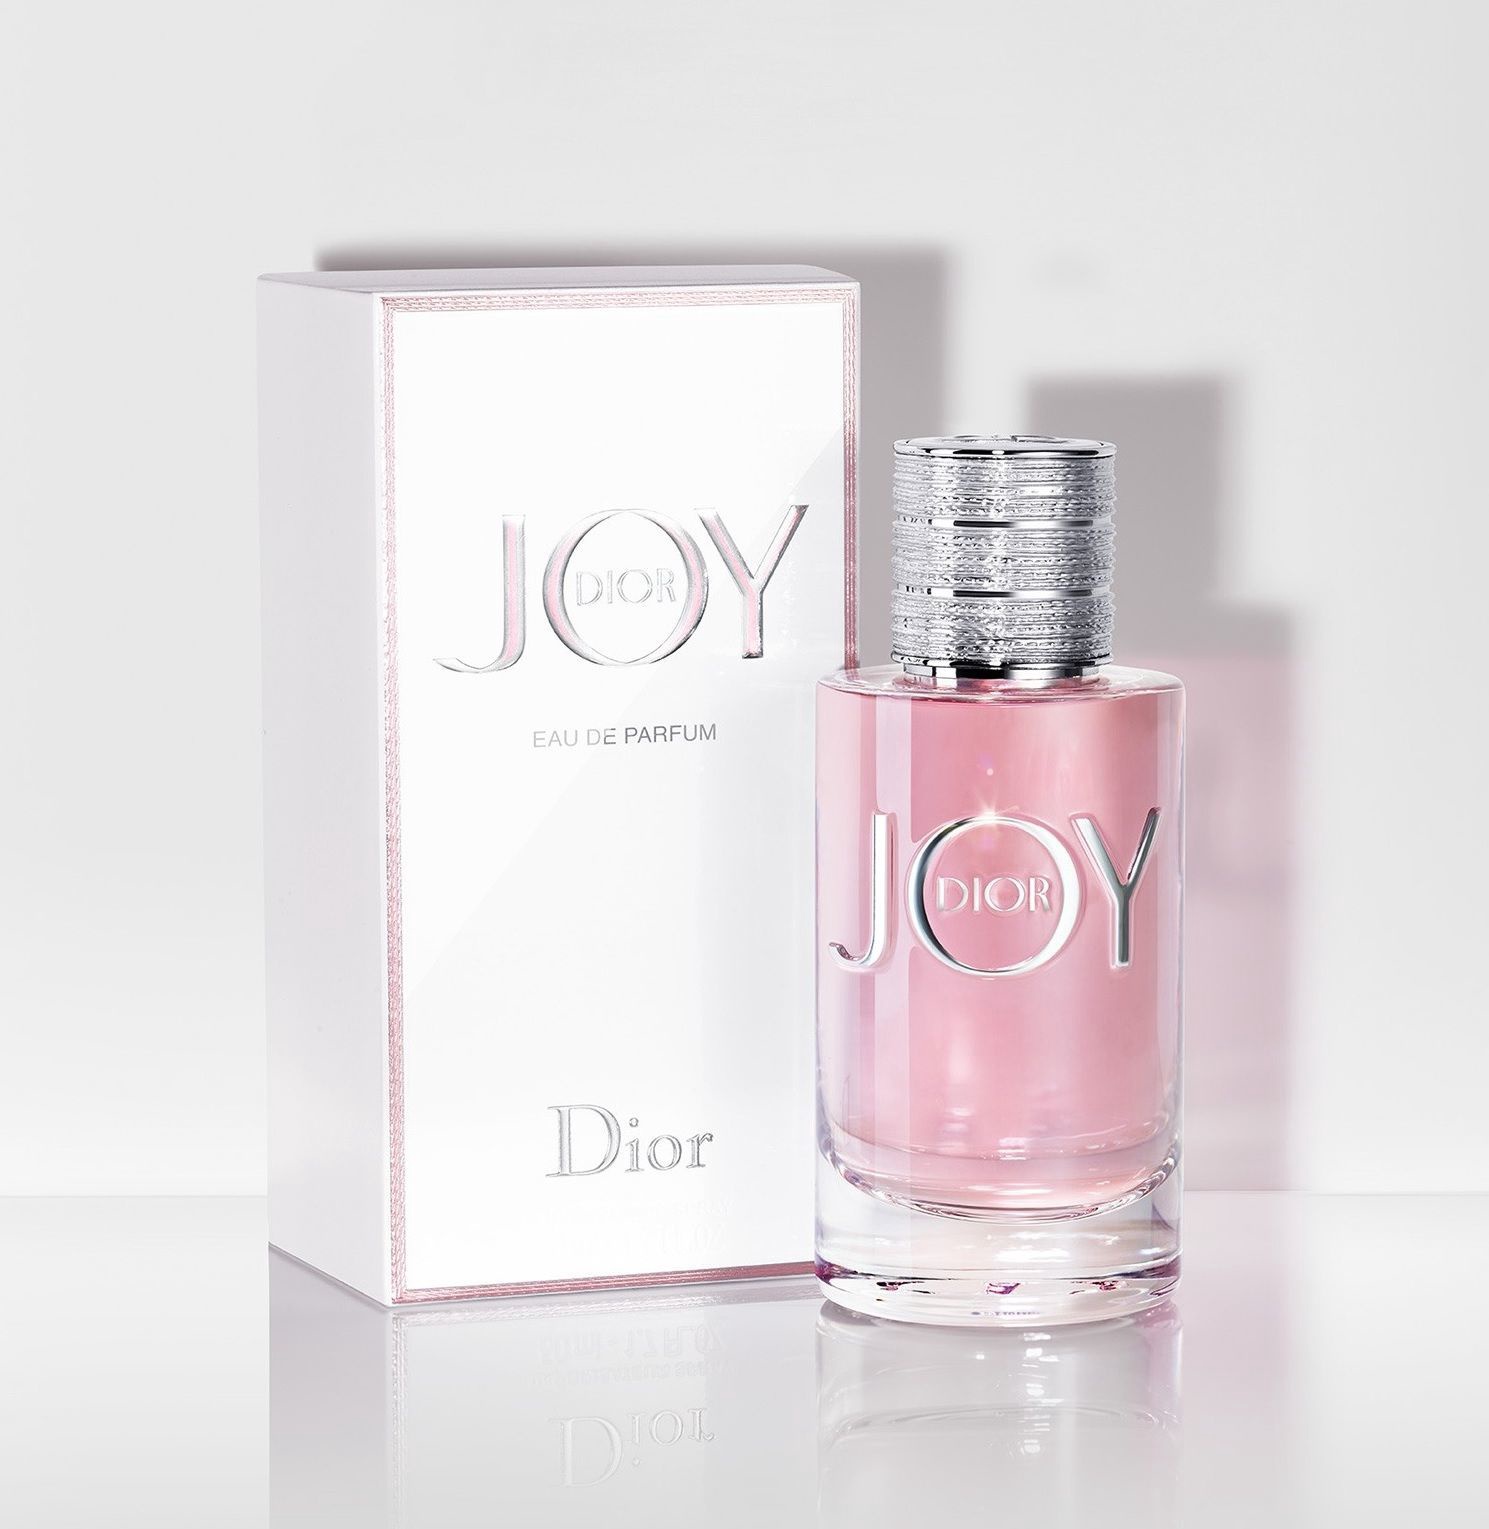 dior joy 30ml price